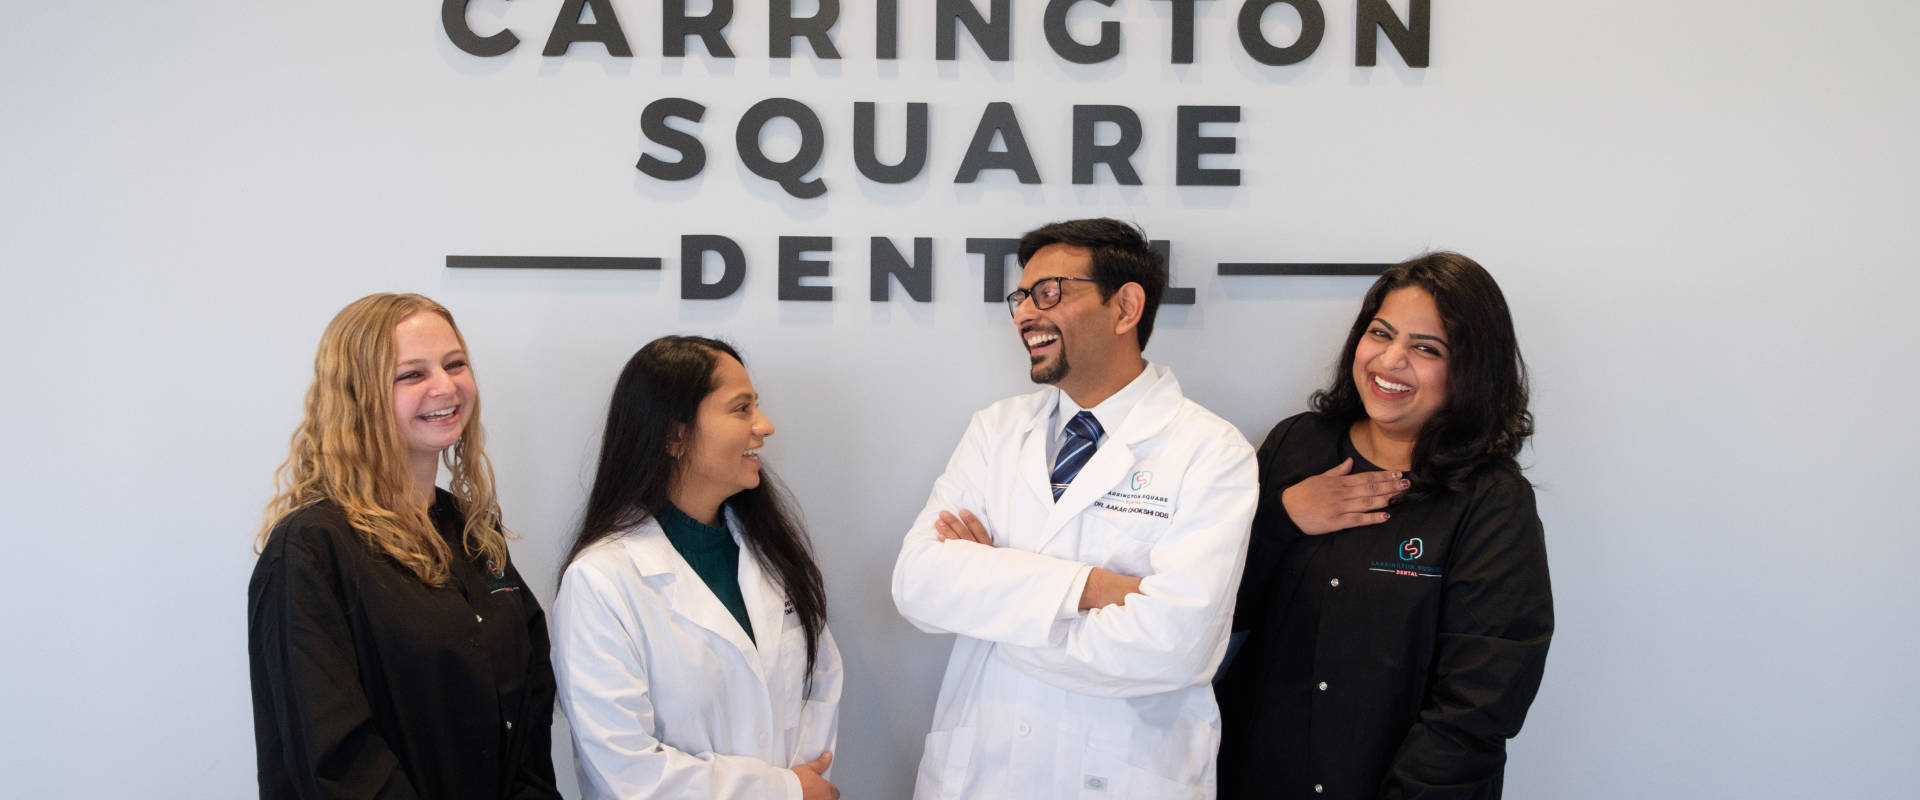 Carrington Square Dental team.